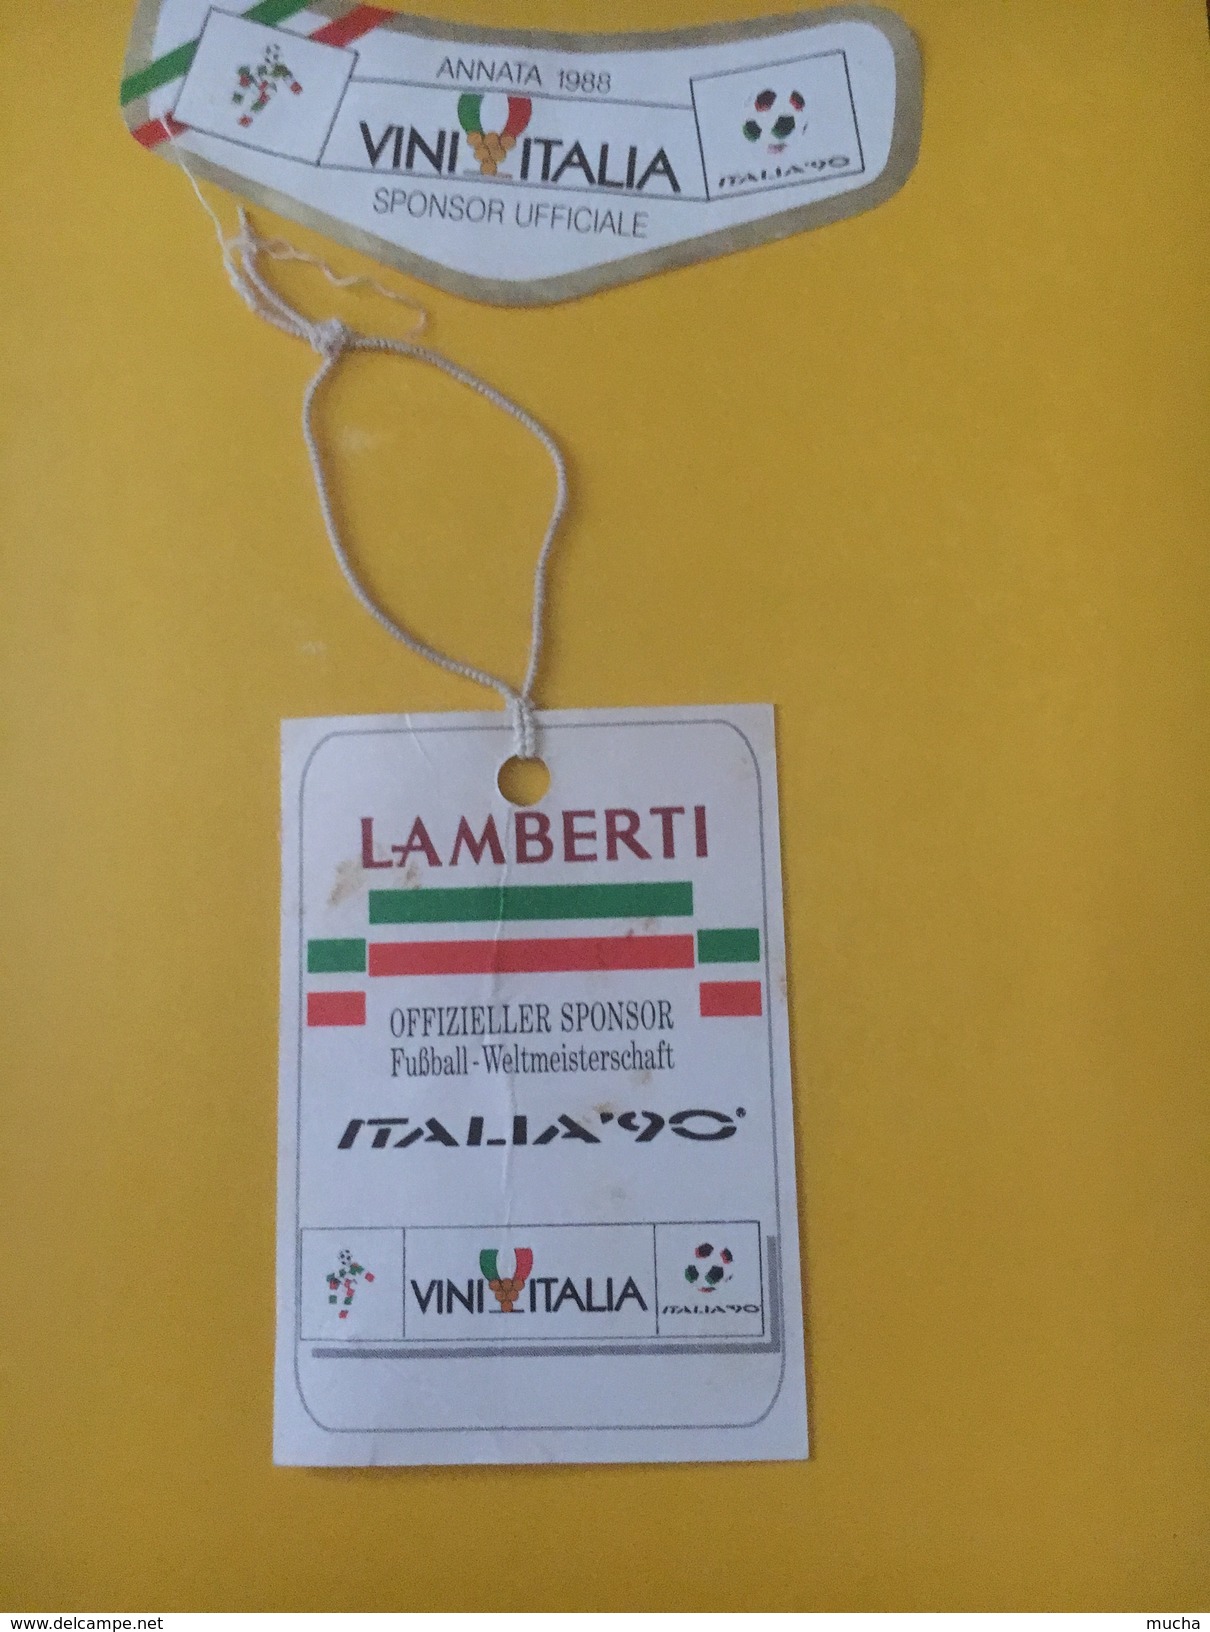 5445 - Lamberti  1989 Sponsor Officiel Italia 90 - Fussball